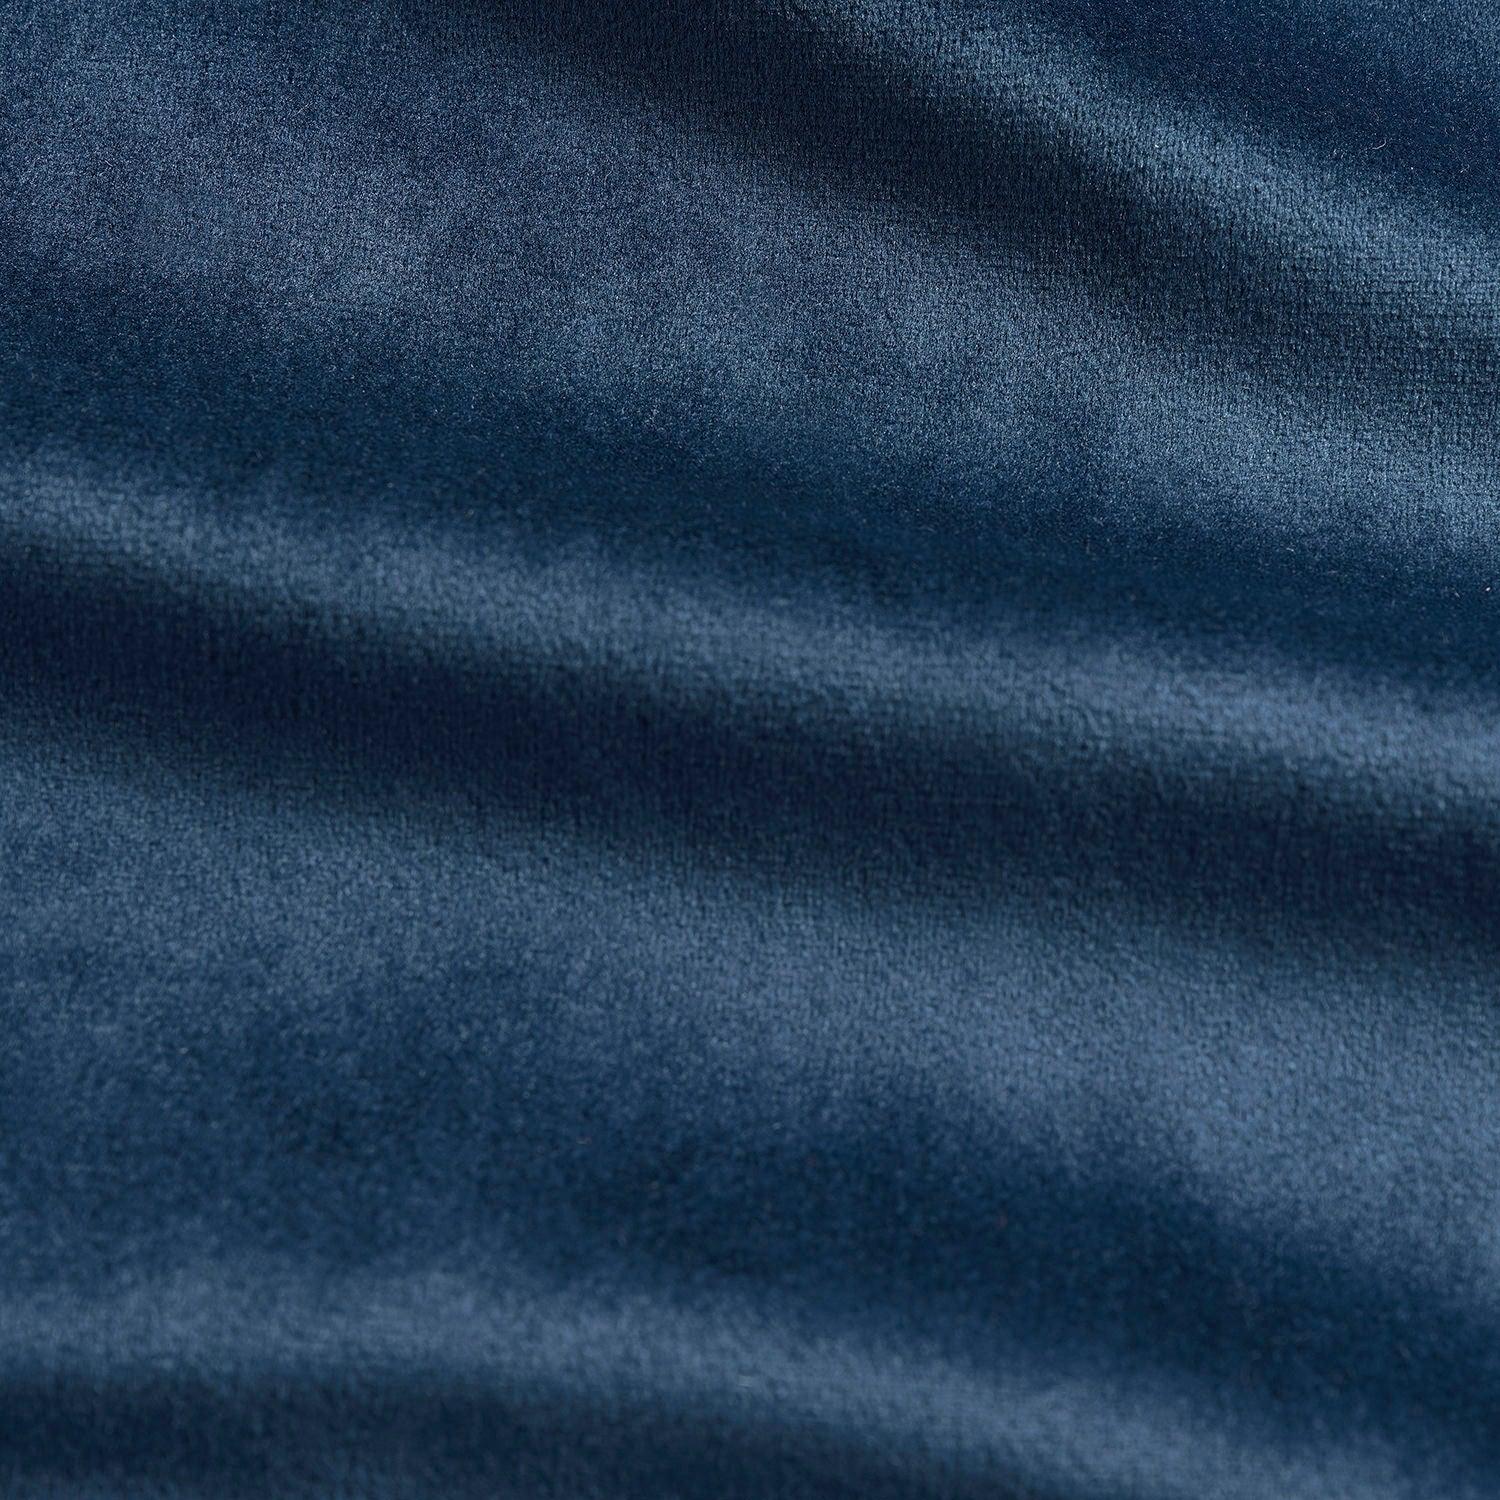 Deep Cobalt Blue Simply Velvet Curtain Pair (2 Panels)